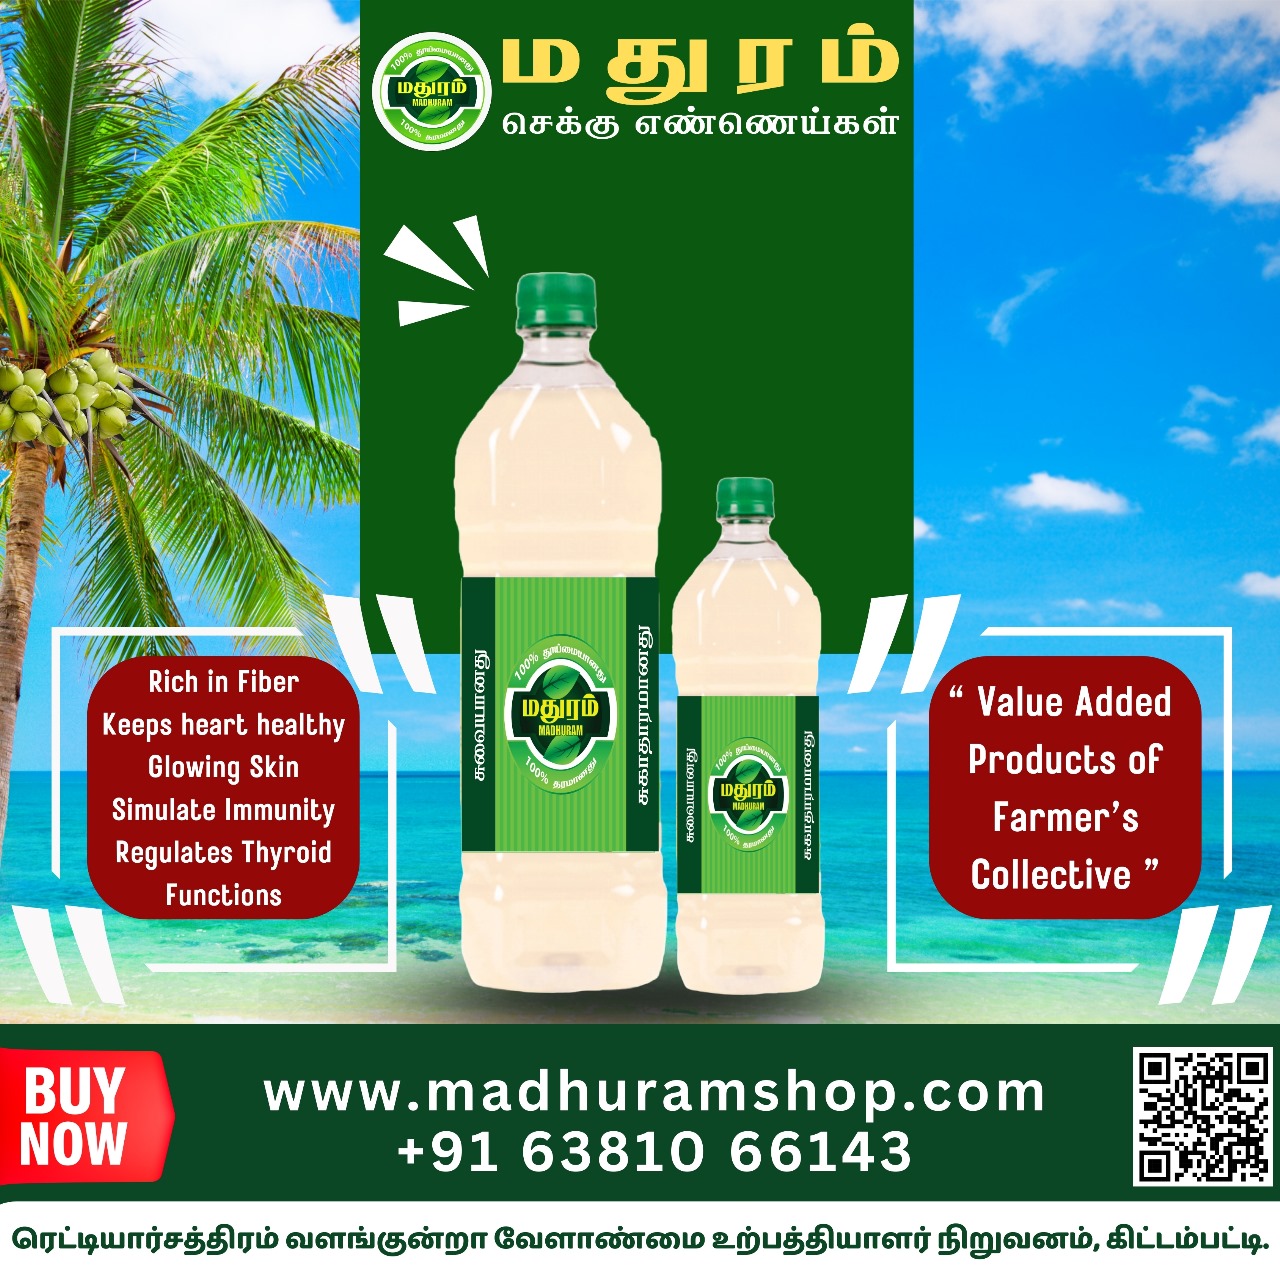 Madhuram Shop is one of the leadinbg Chekku Oil Manufactur - Tamil Nadu - Dindigul ID1548643